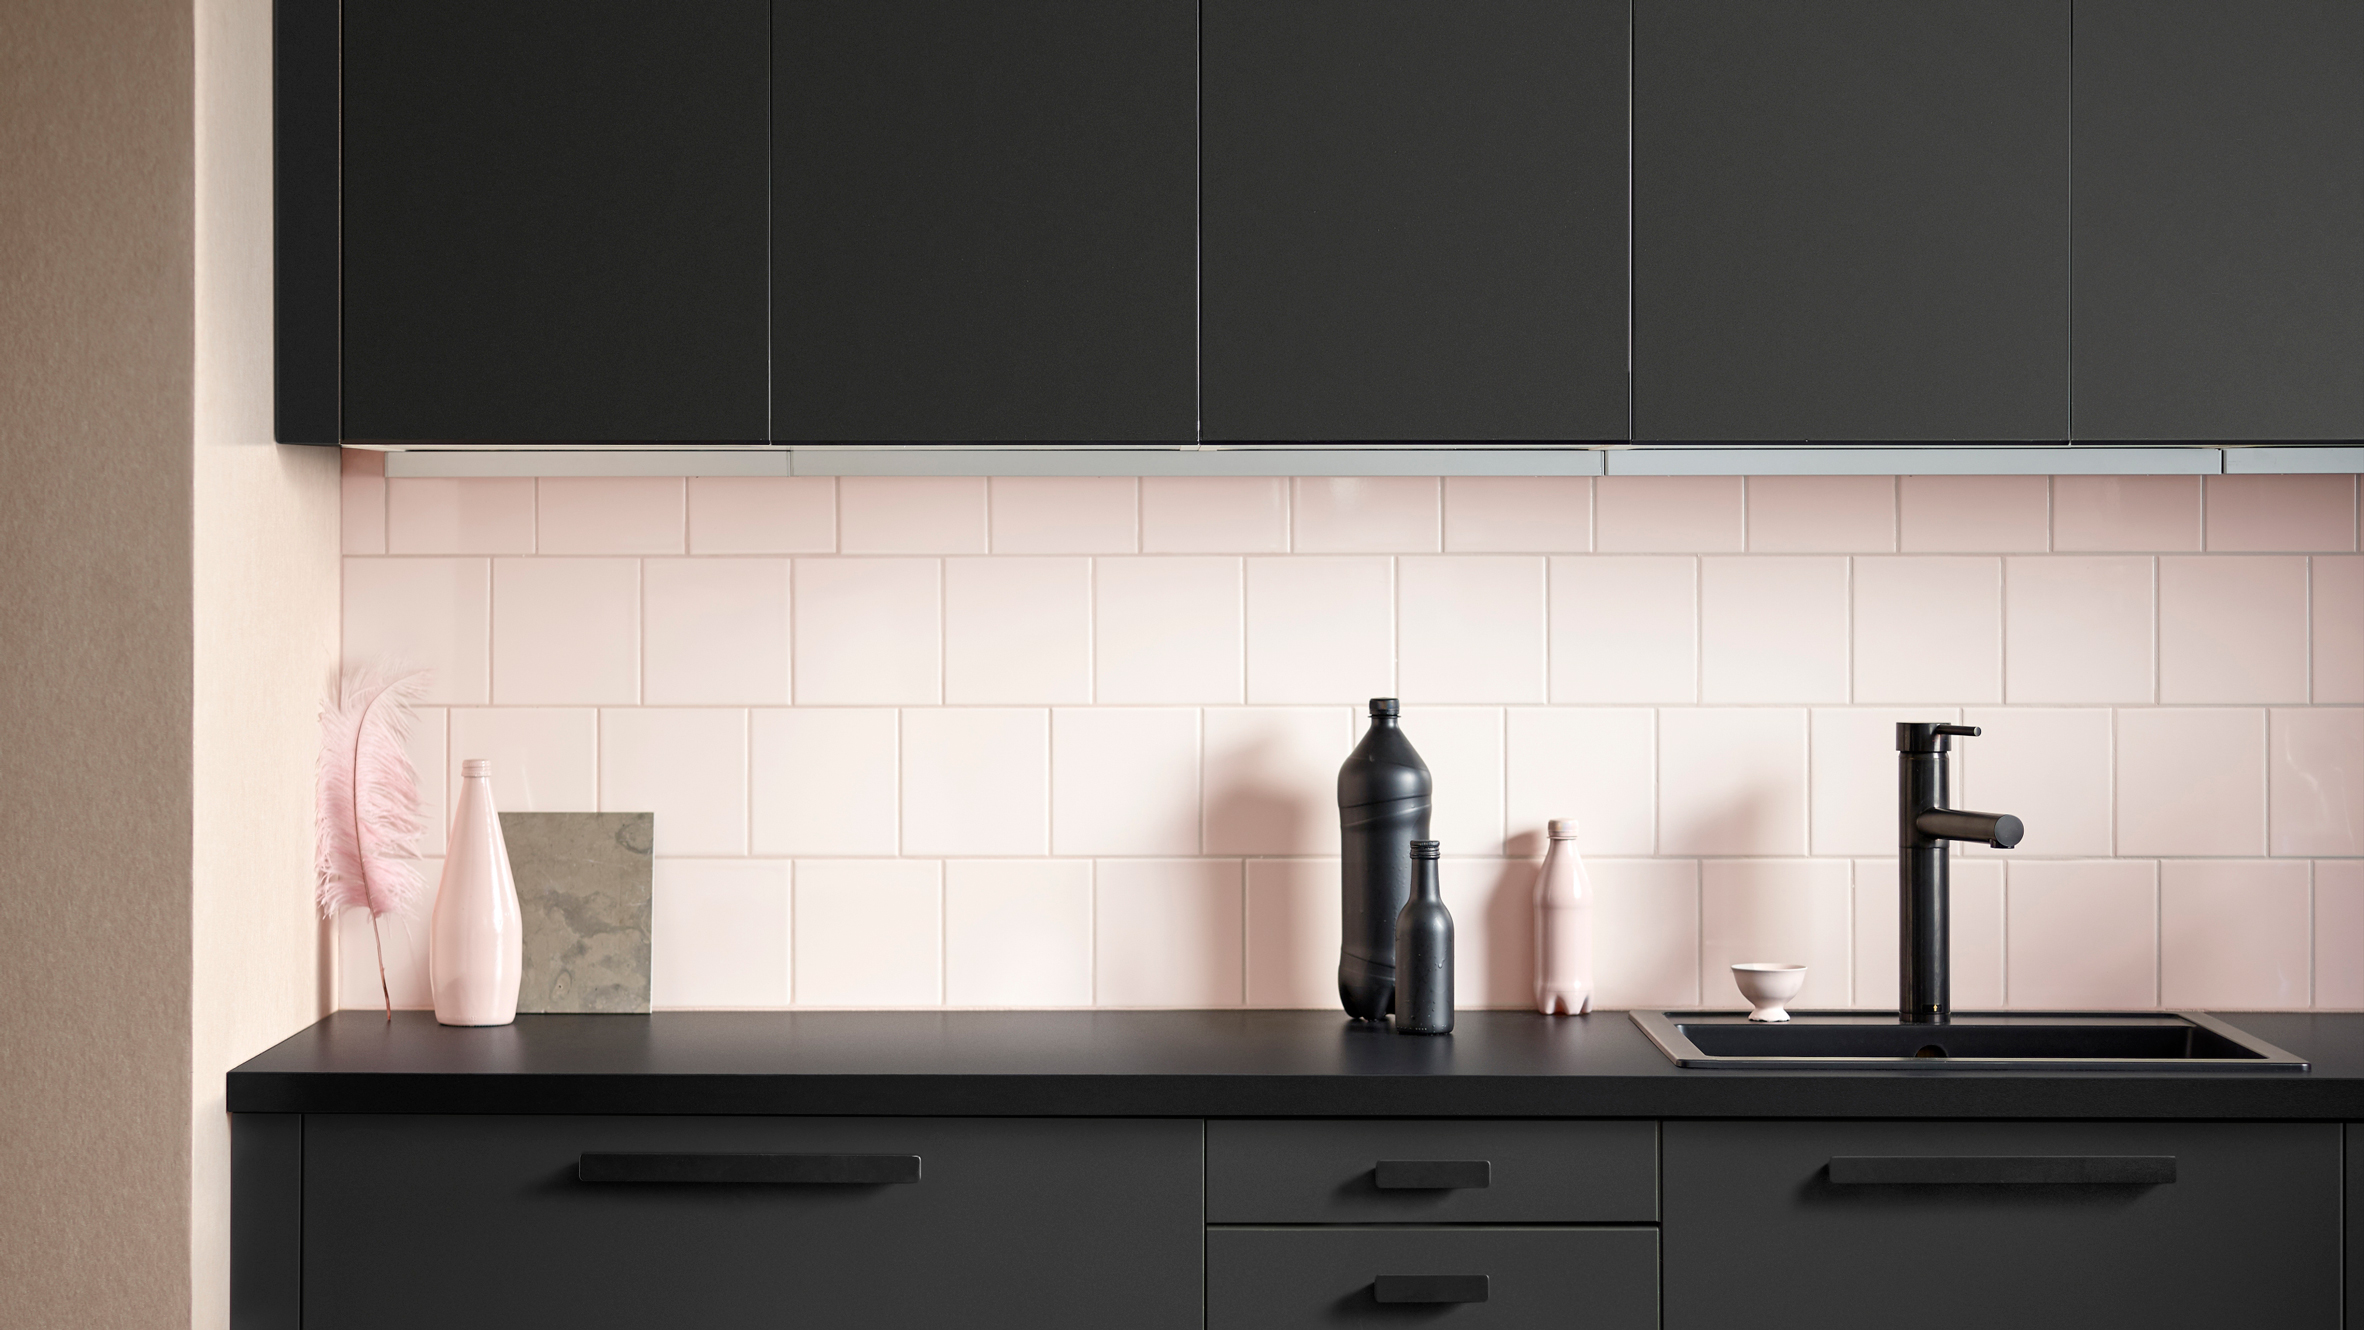 Close up shot of black kitchen counter and cabinets with pale pink tiled backsplash.